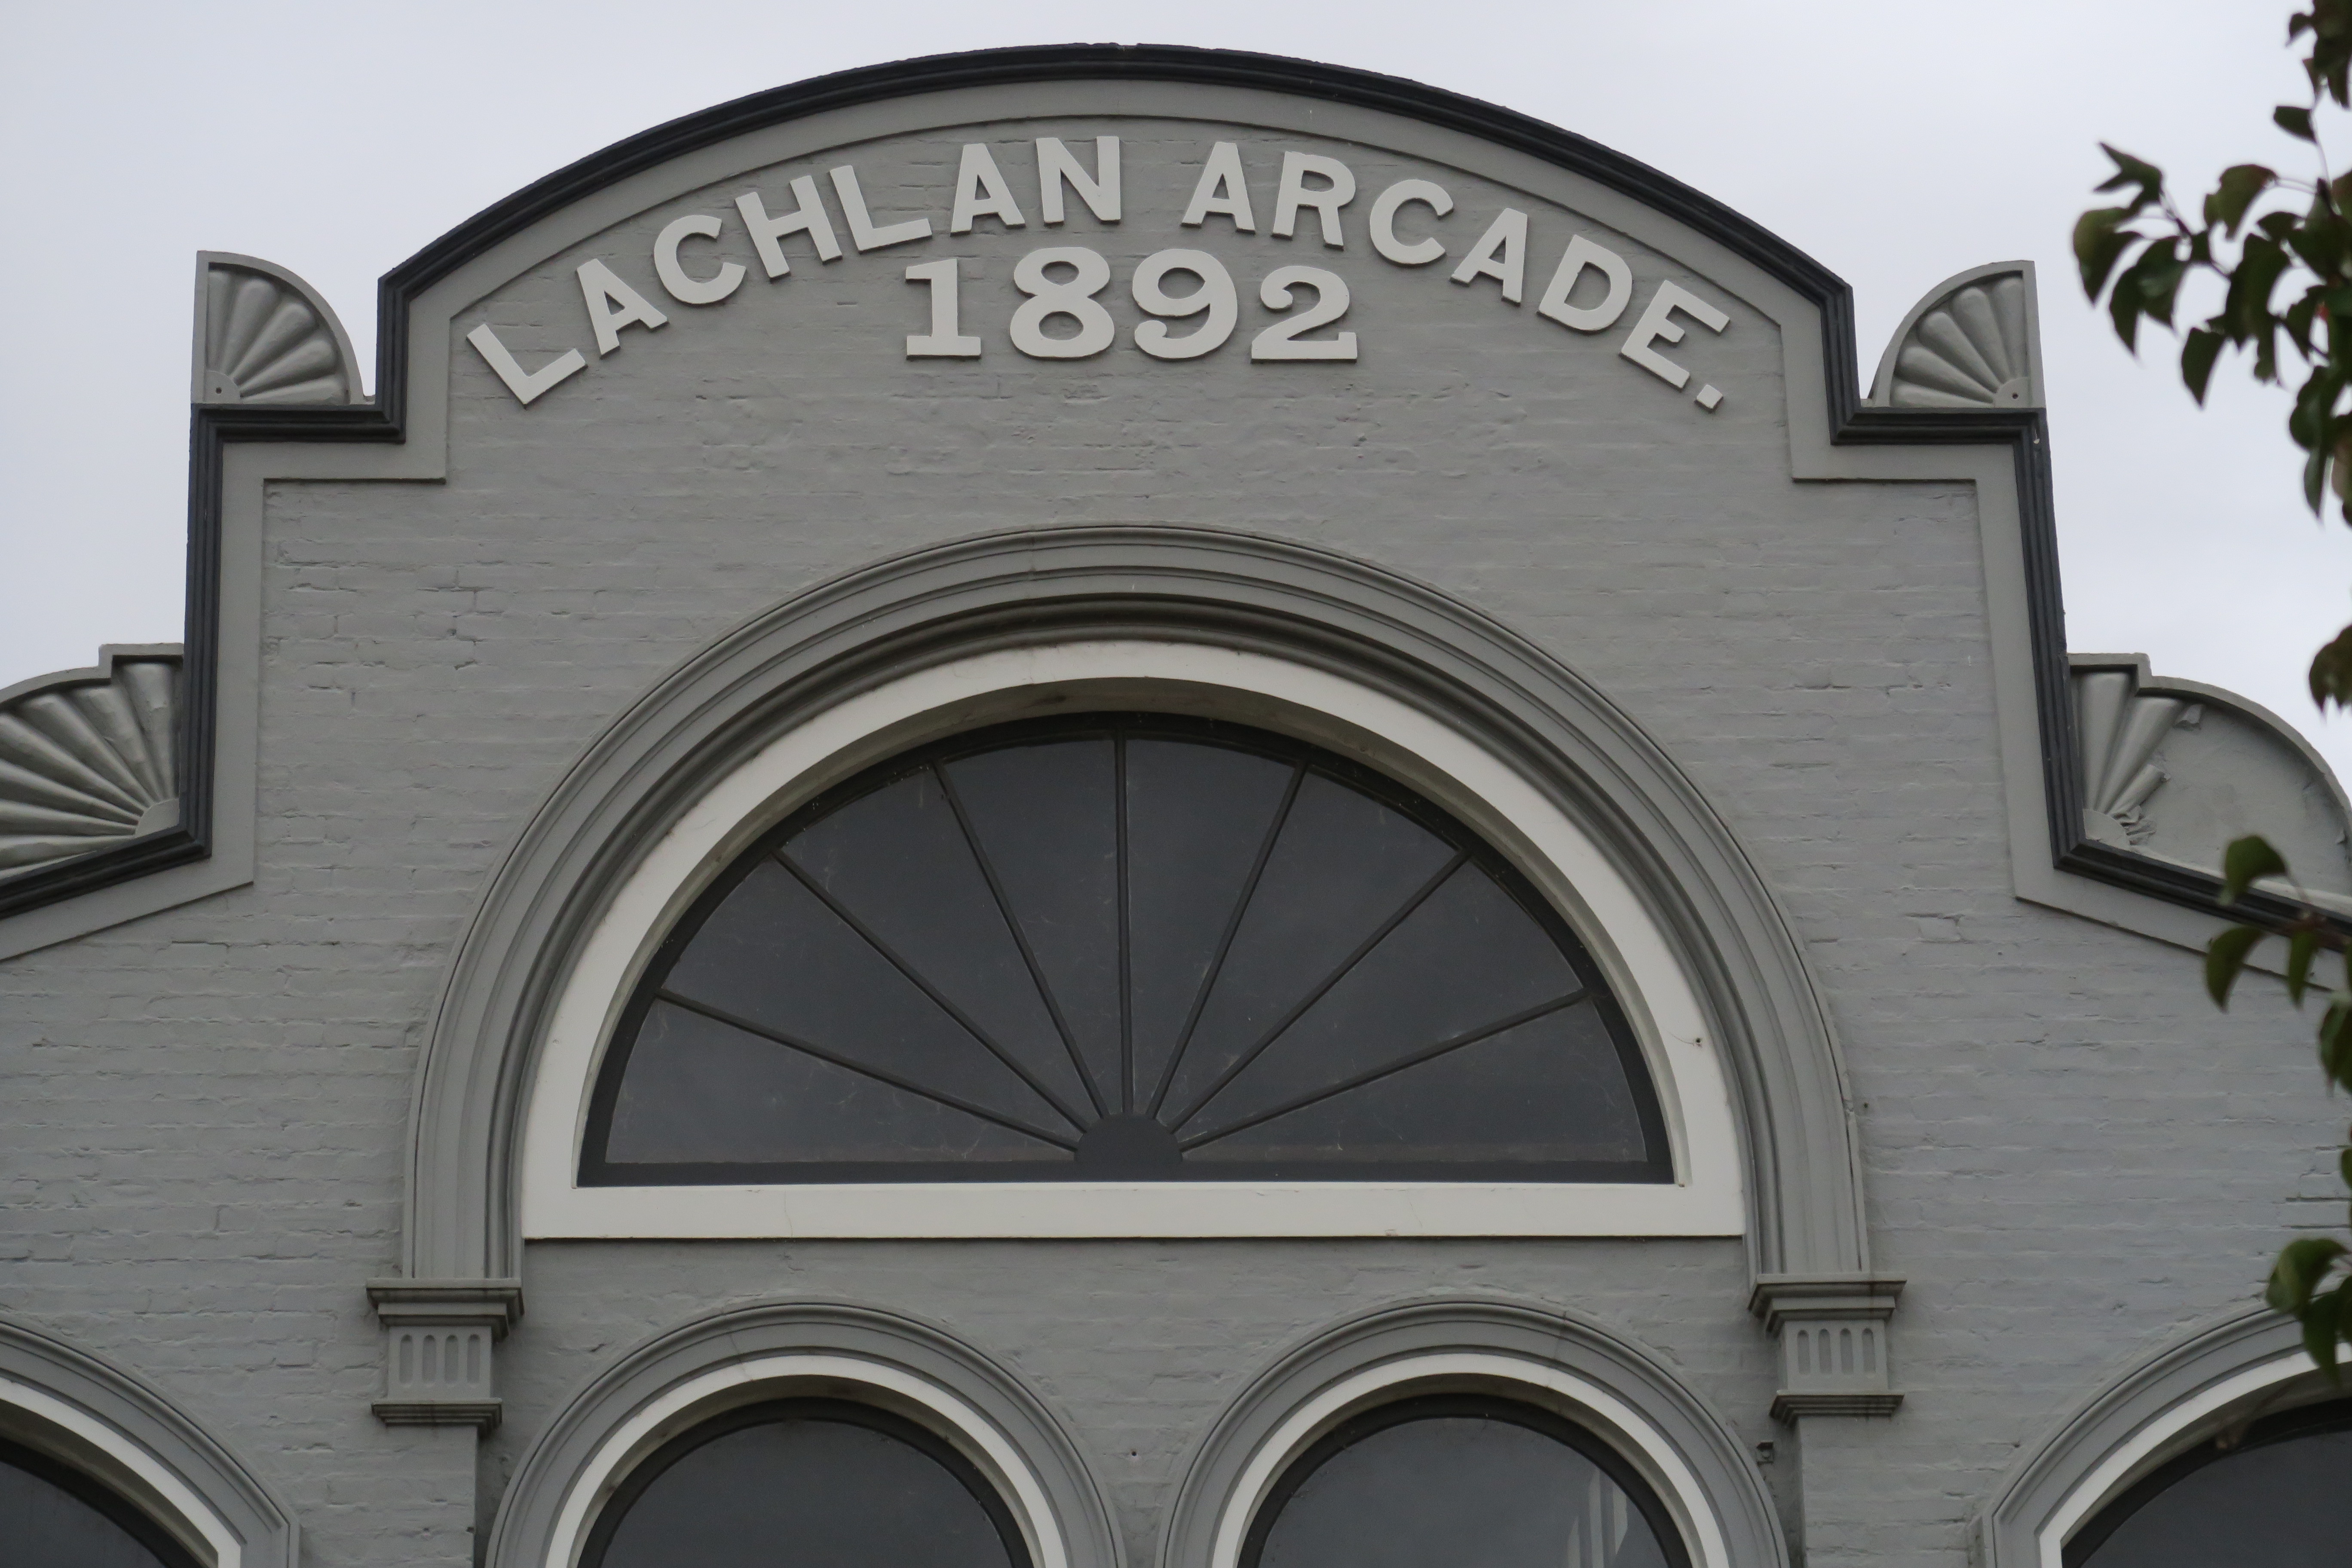 Lachlan Arcade